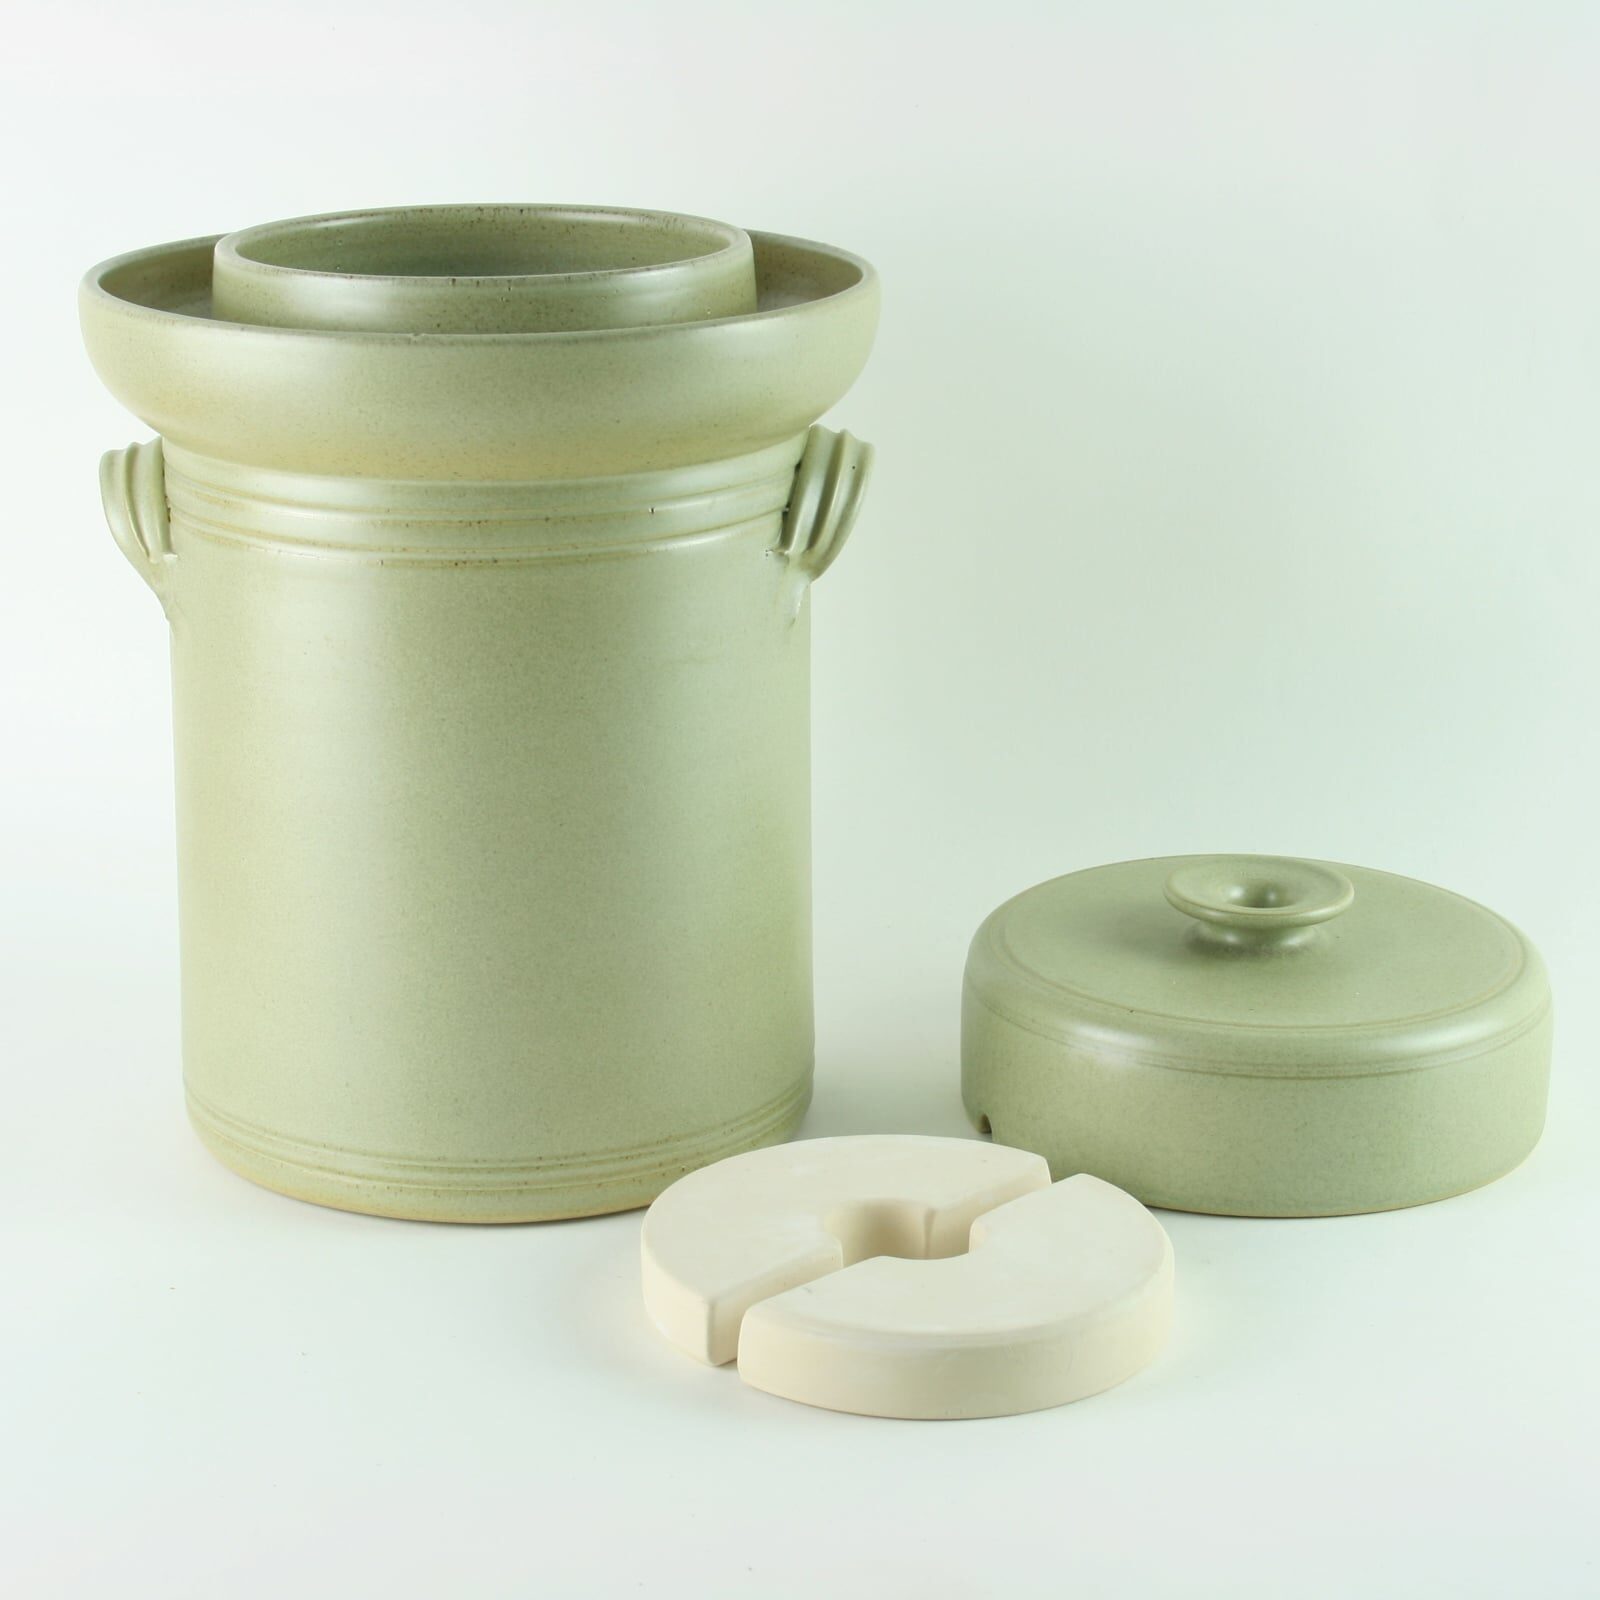 handmade 4 litre ceramic fermentation crock for making sauerkraut, kimchi and pickles